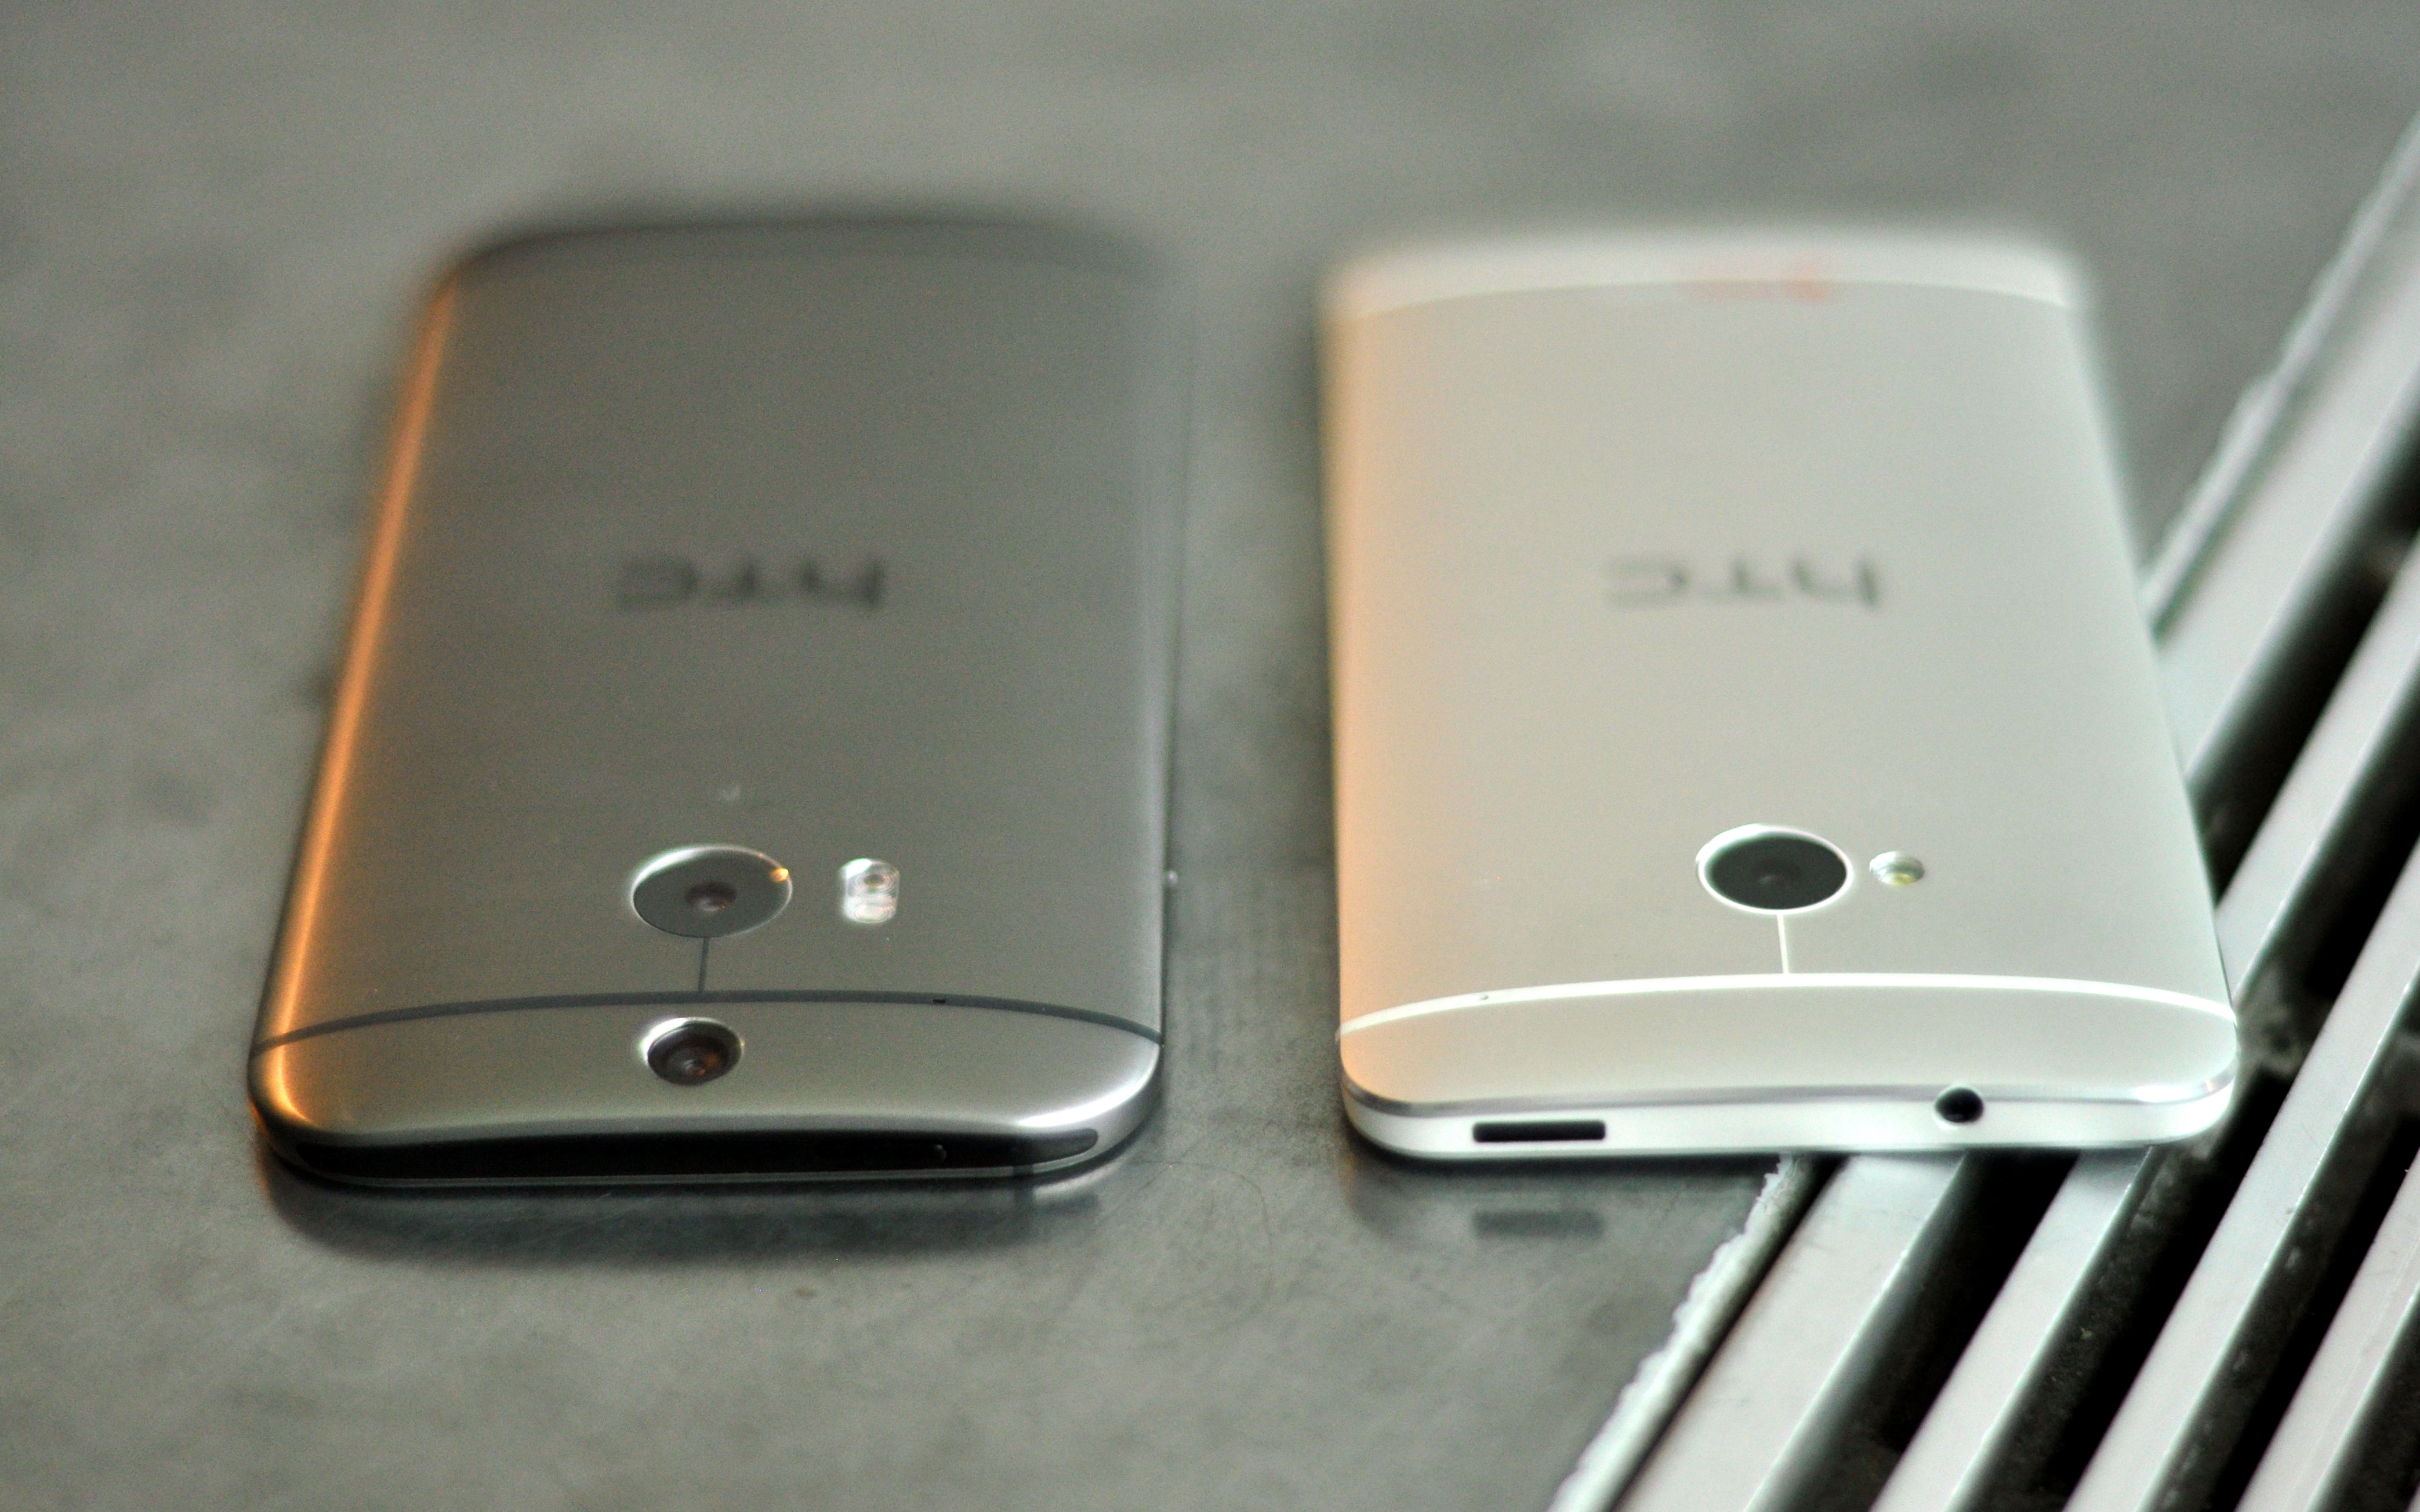 HTC-One-M7-vs-HTC-One-M8-specs-price-design-compared-thickness.jpg